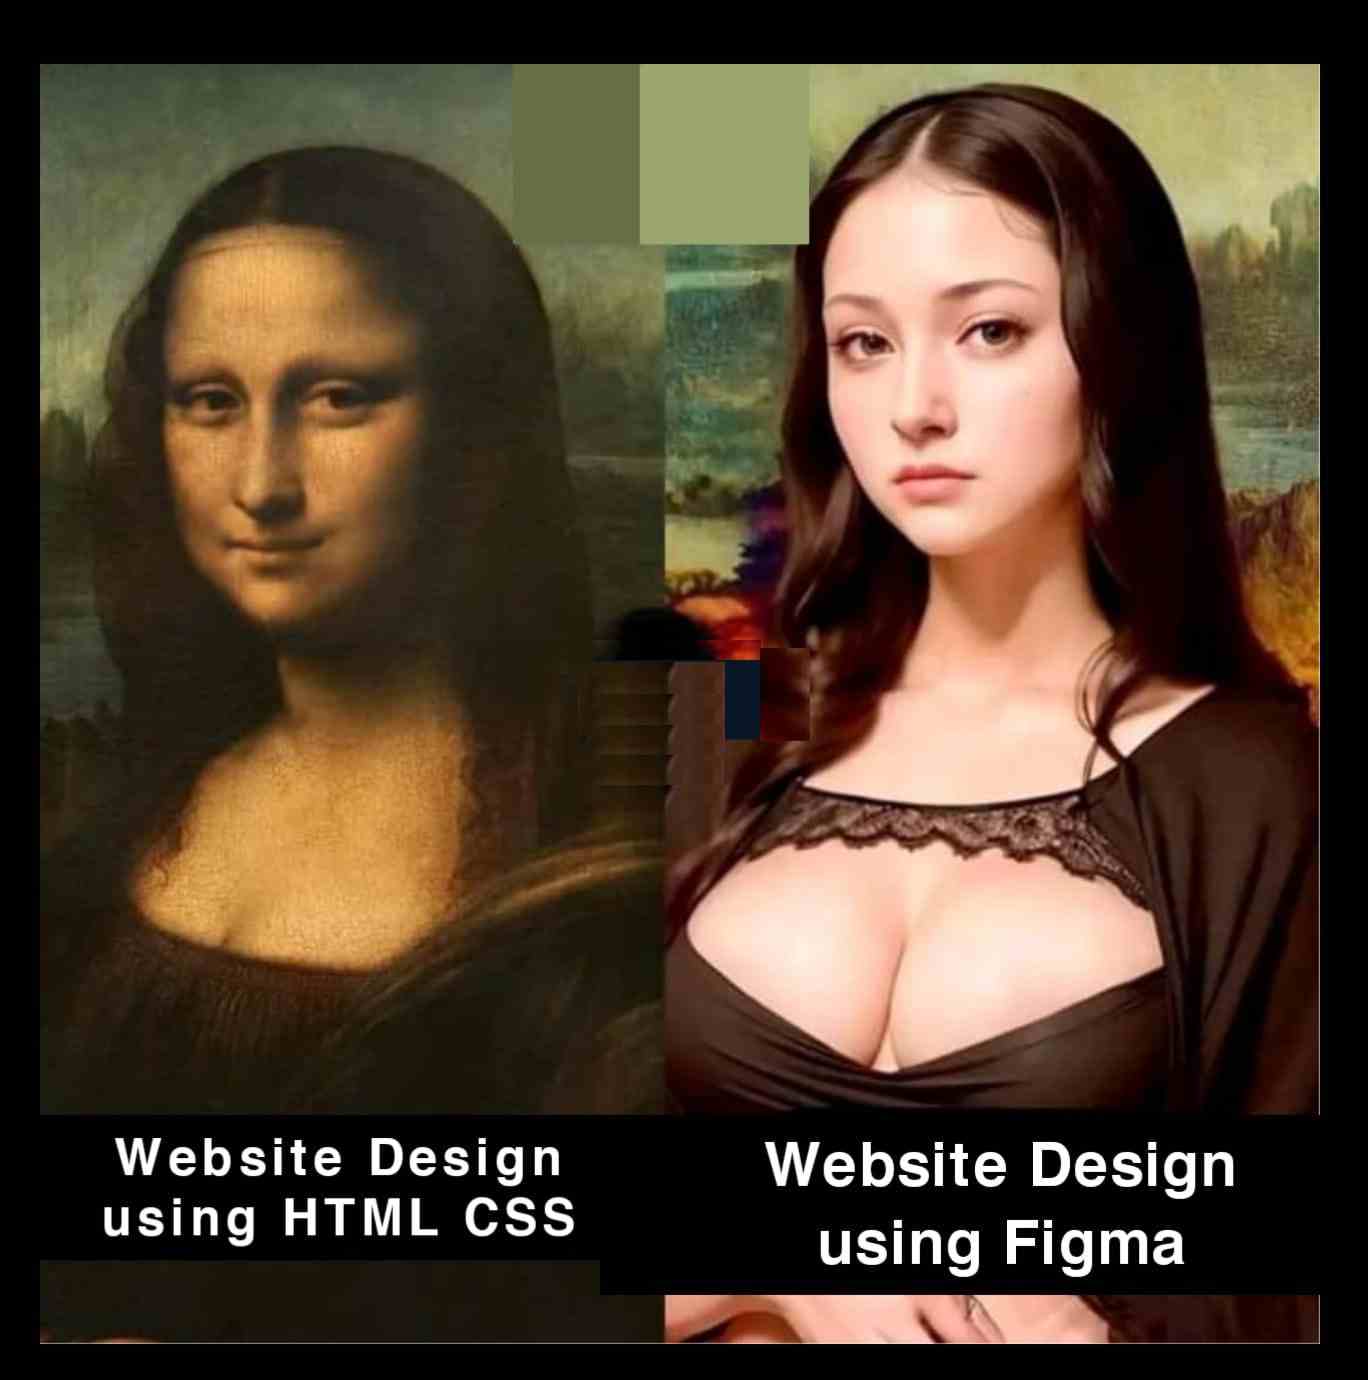 Website Design using HTML CSS & Website Design using Figma